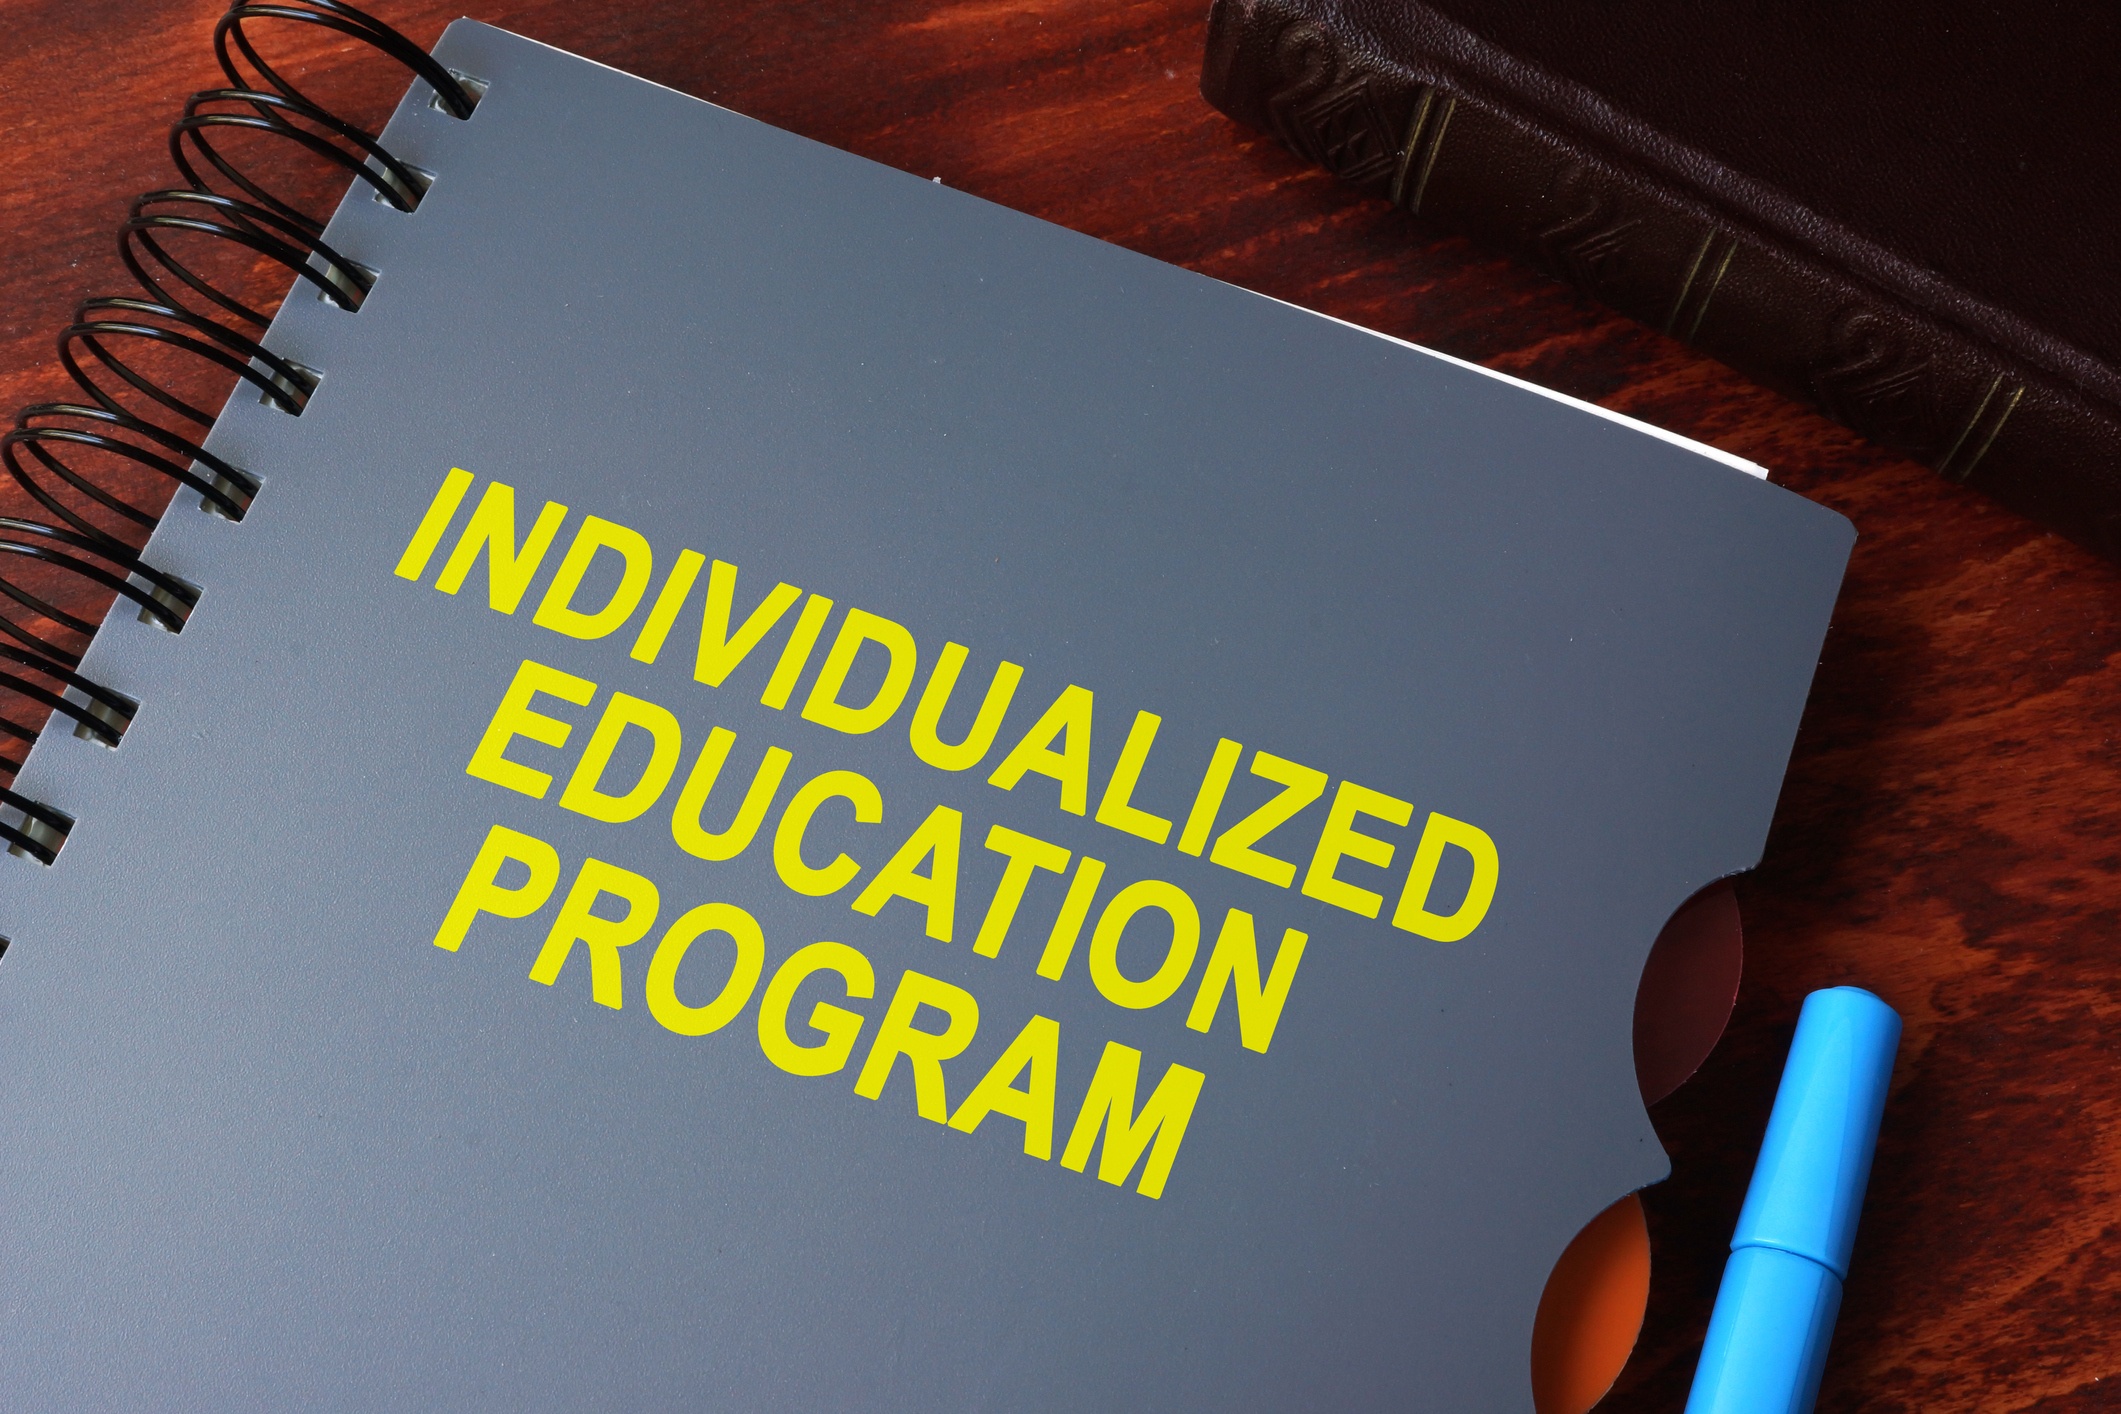 educational programs